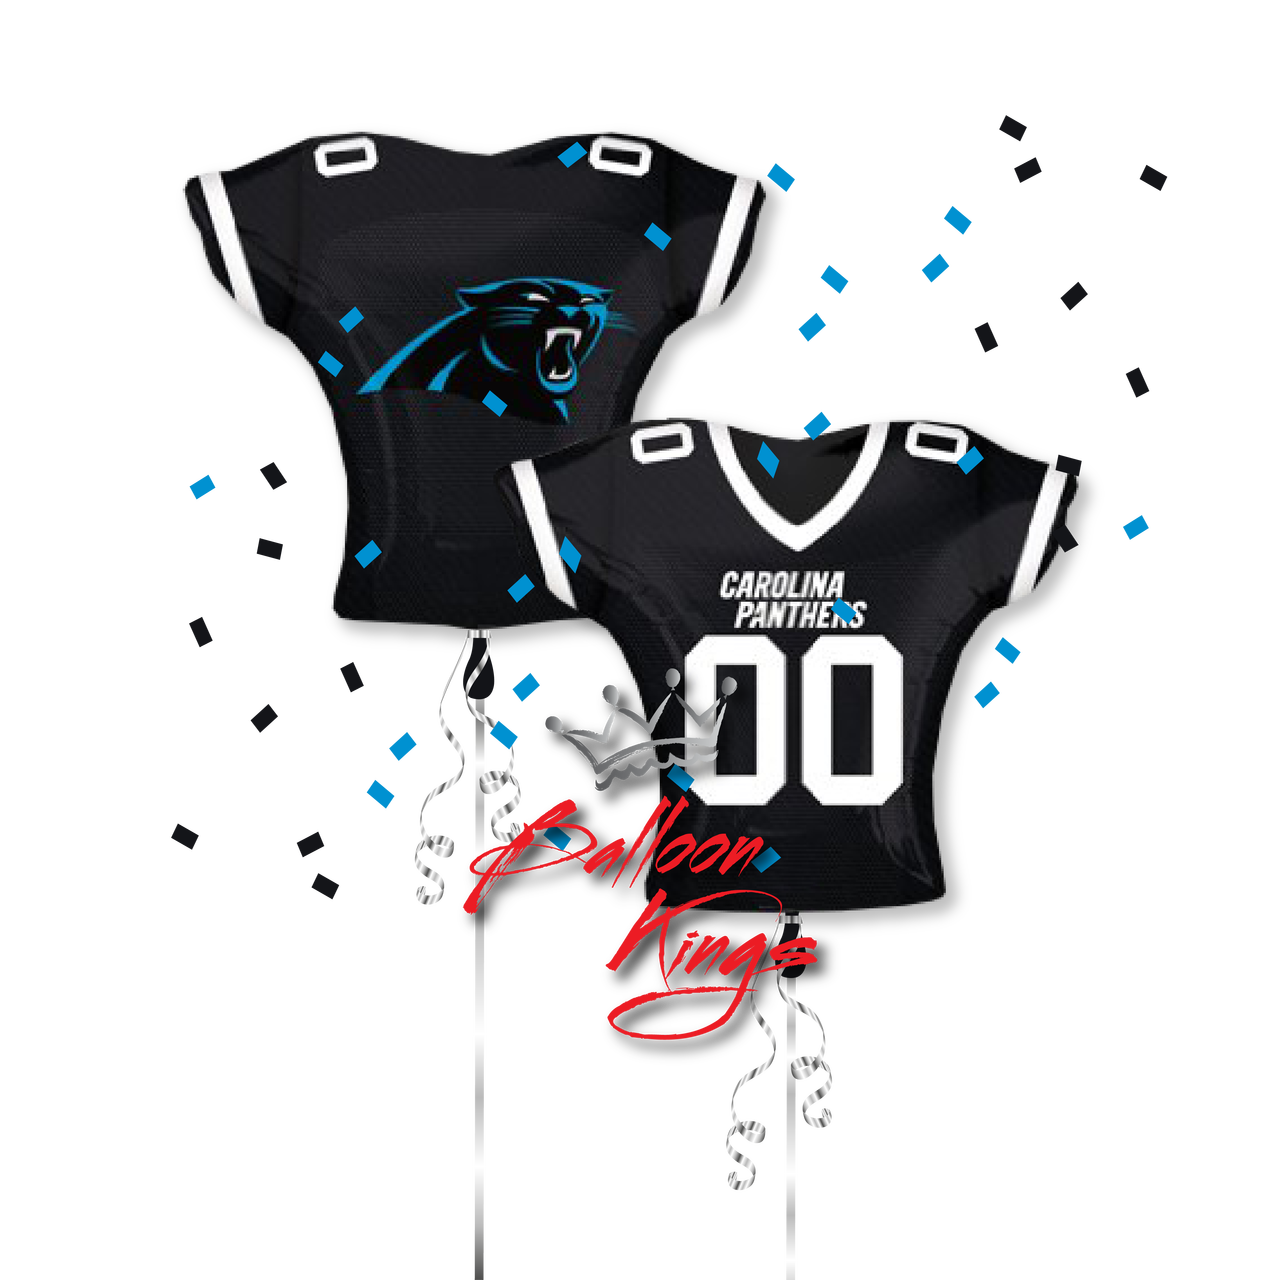 Panthers Custom Dye Sublimated Baseball Jersey